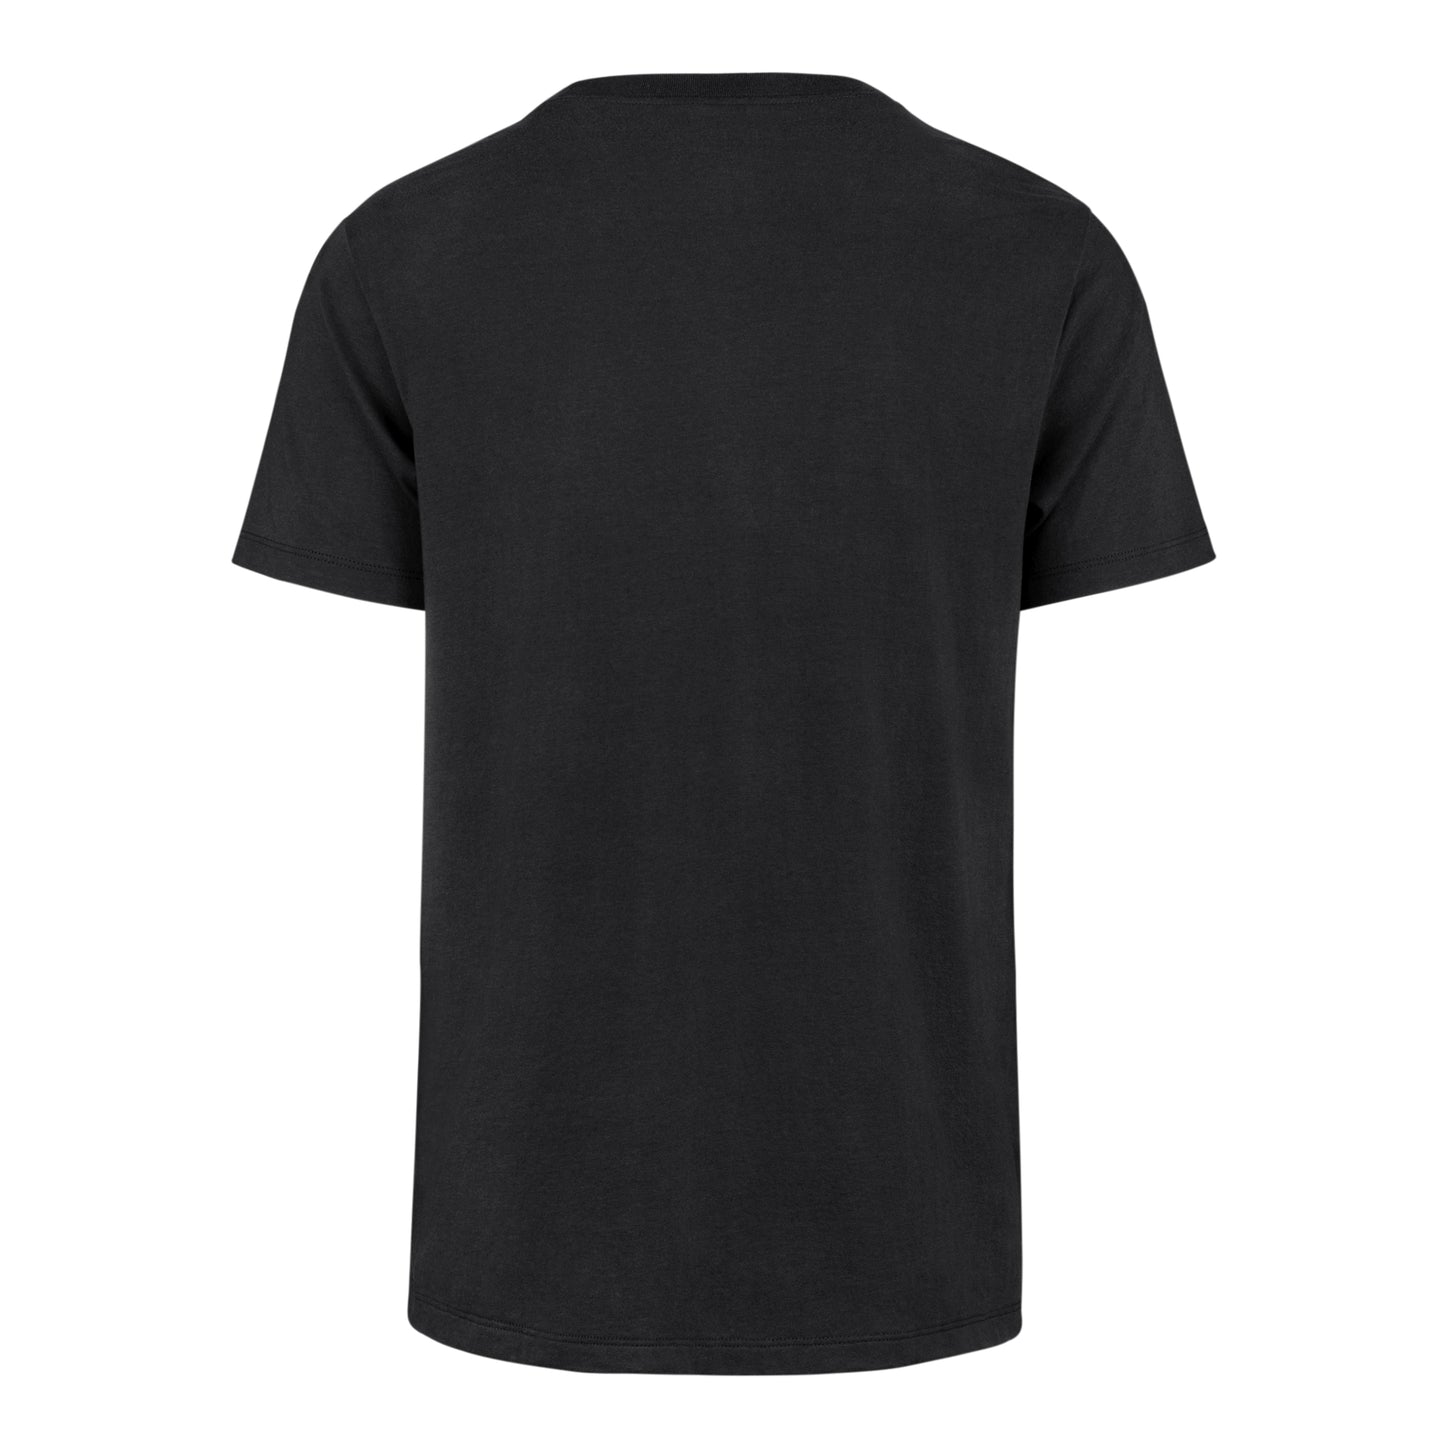 Baltimore Orioles '47 Brand Cooperstown Premier Franklin T-Shirt - Black